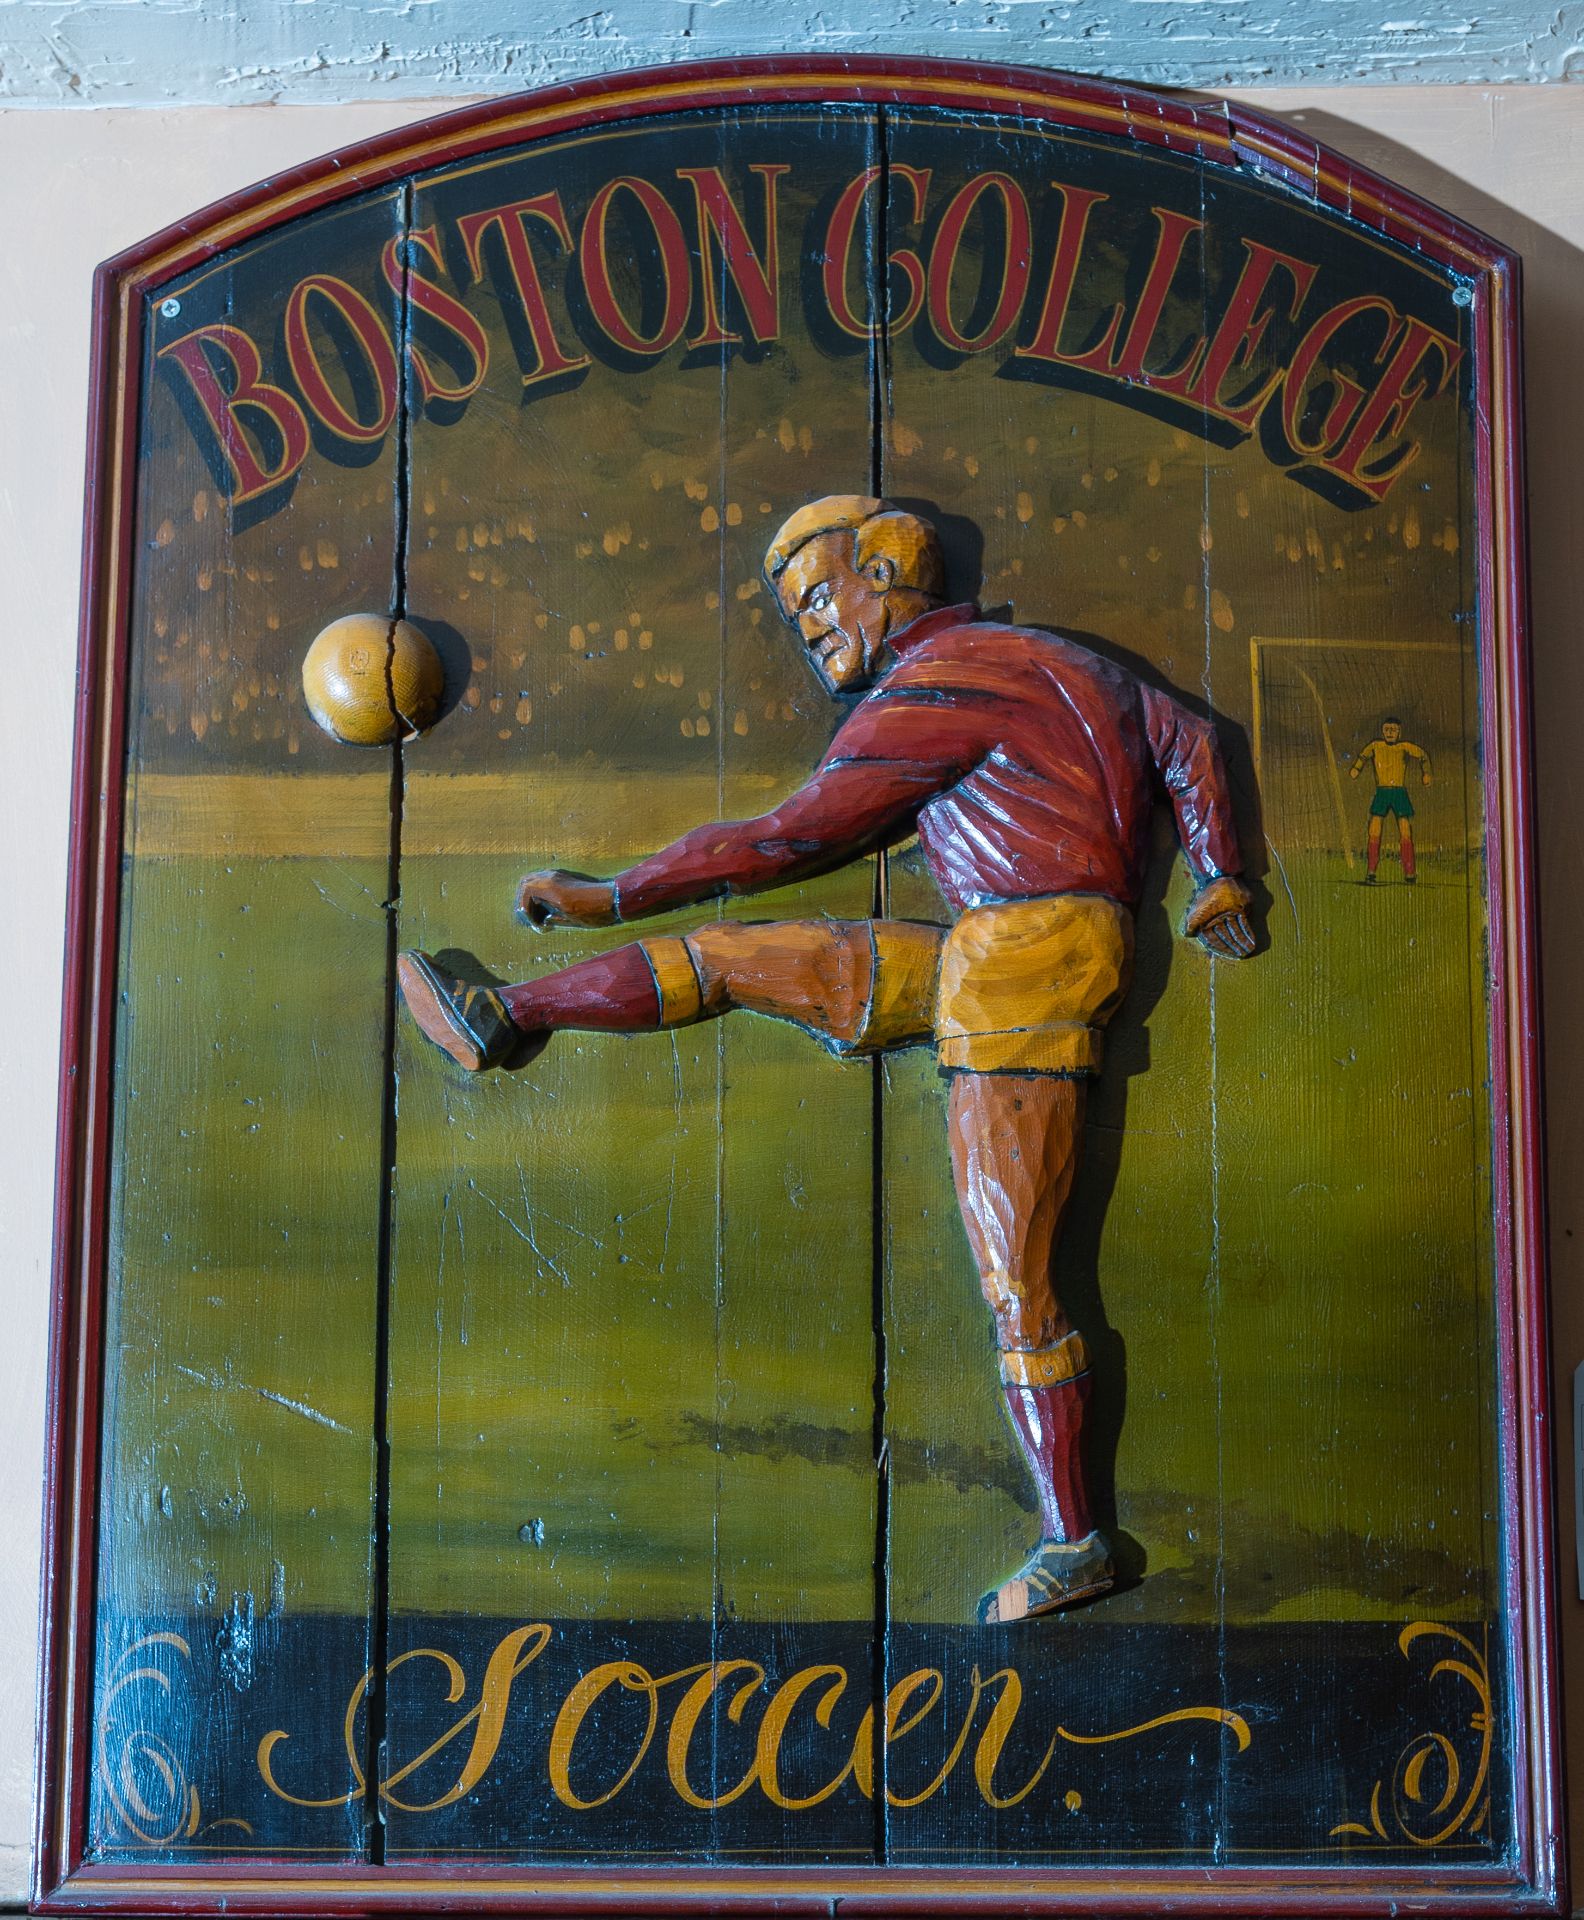 3d Wood Boston College Soccer Plaque 28"x36"